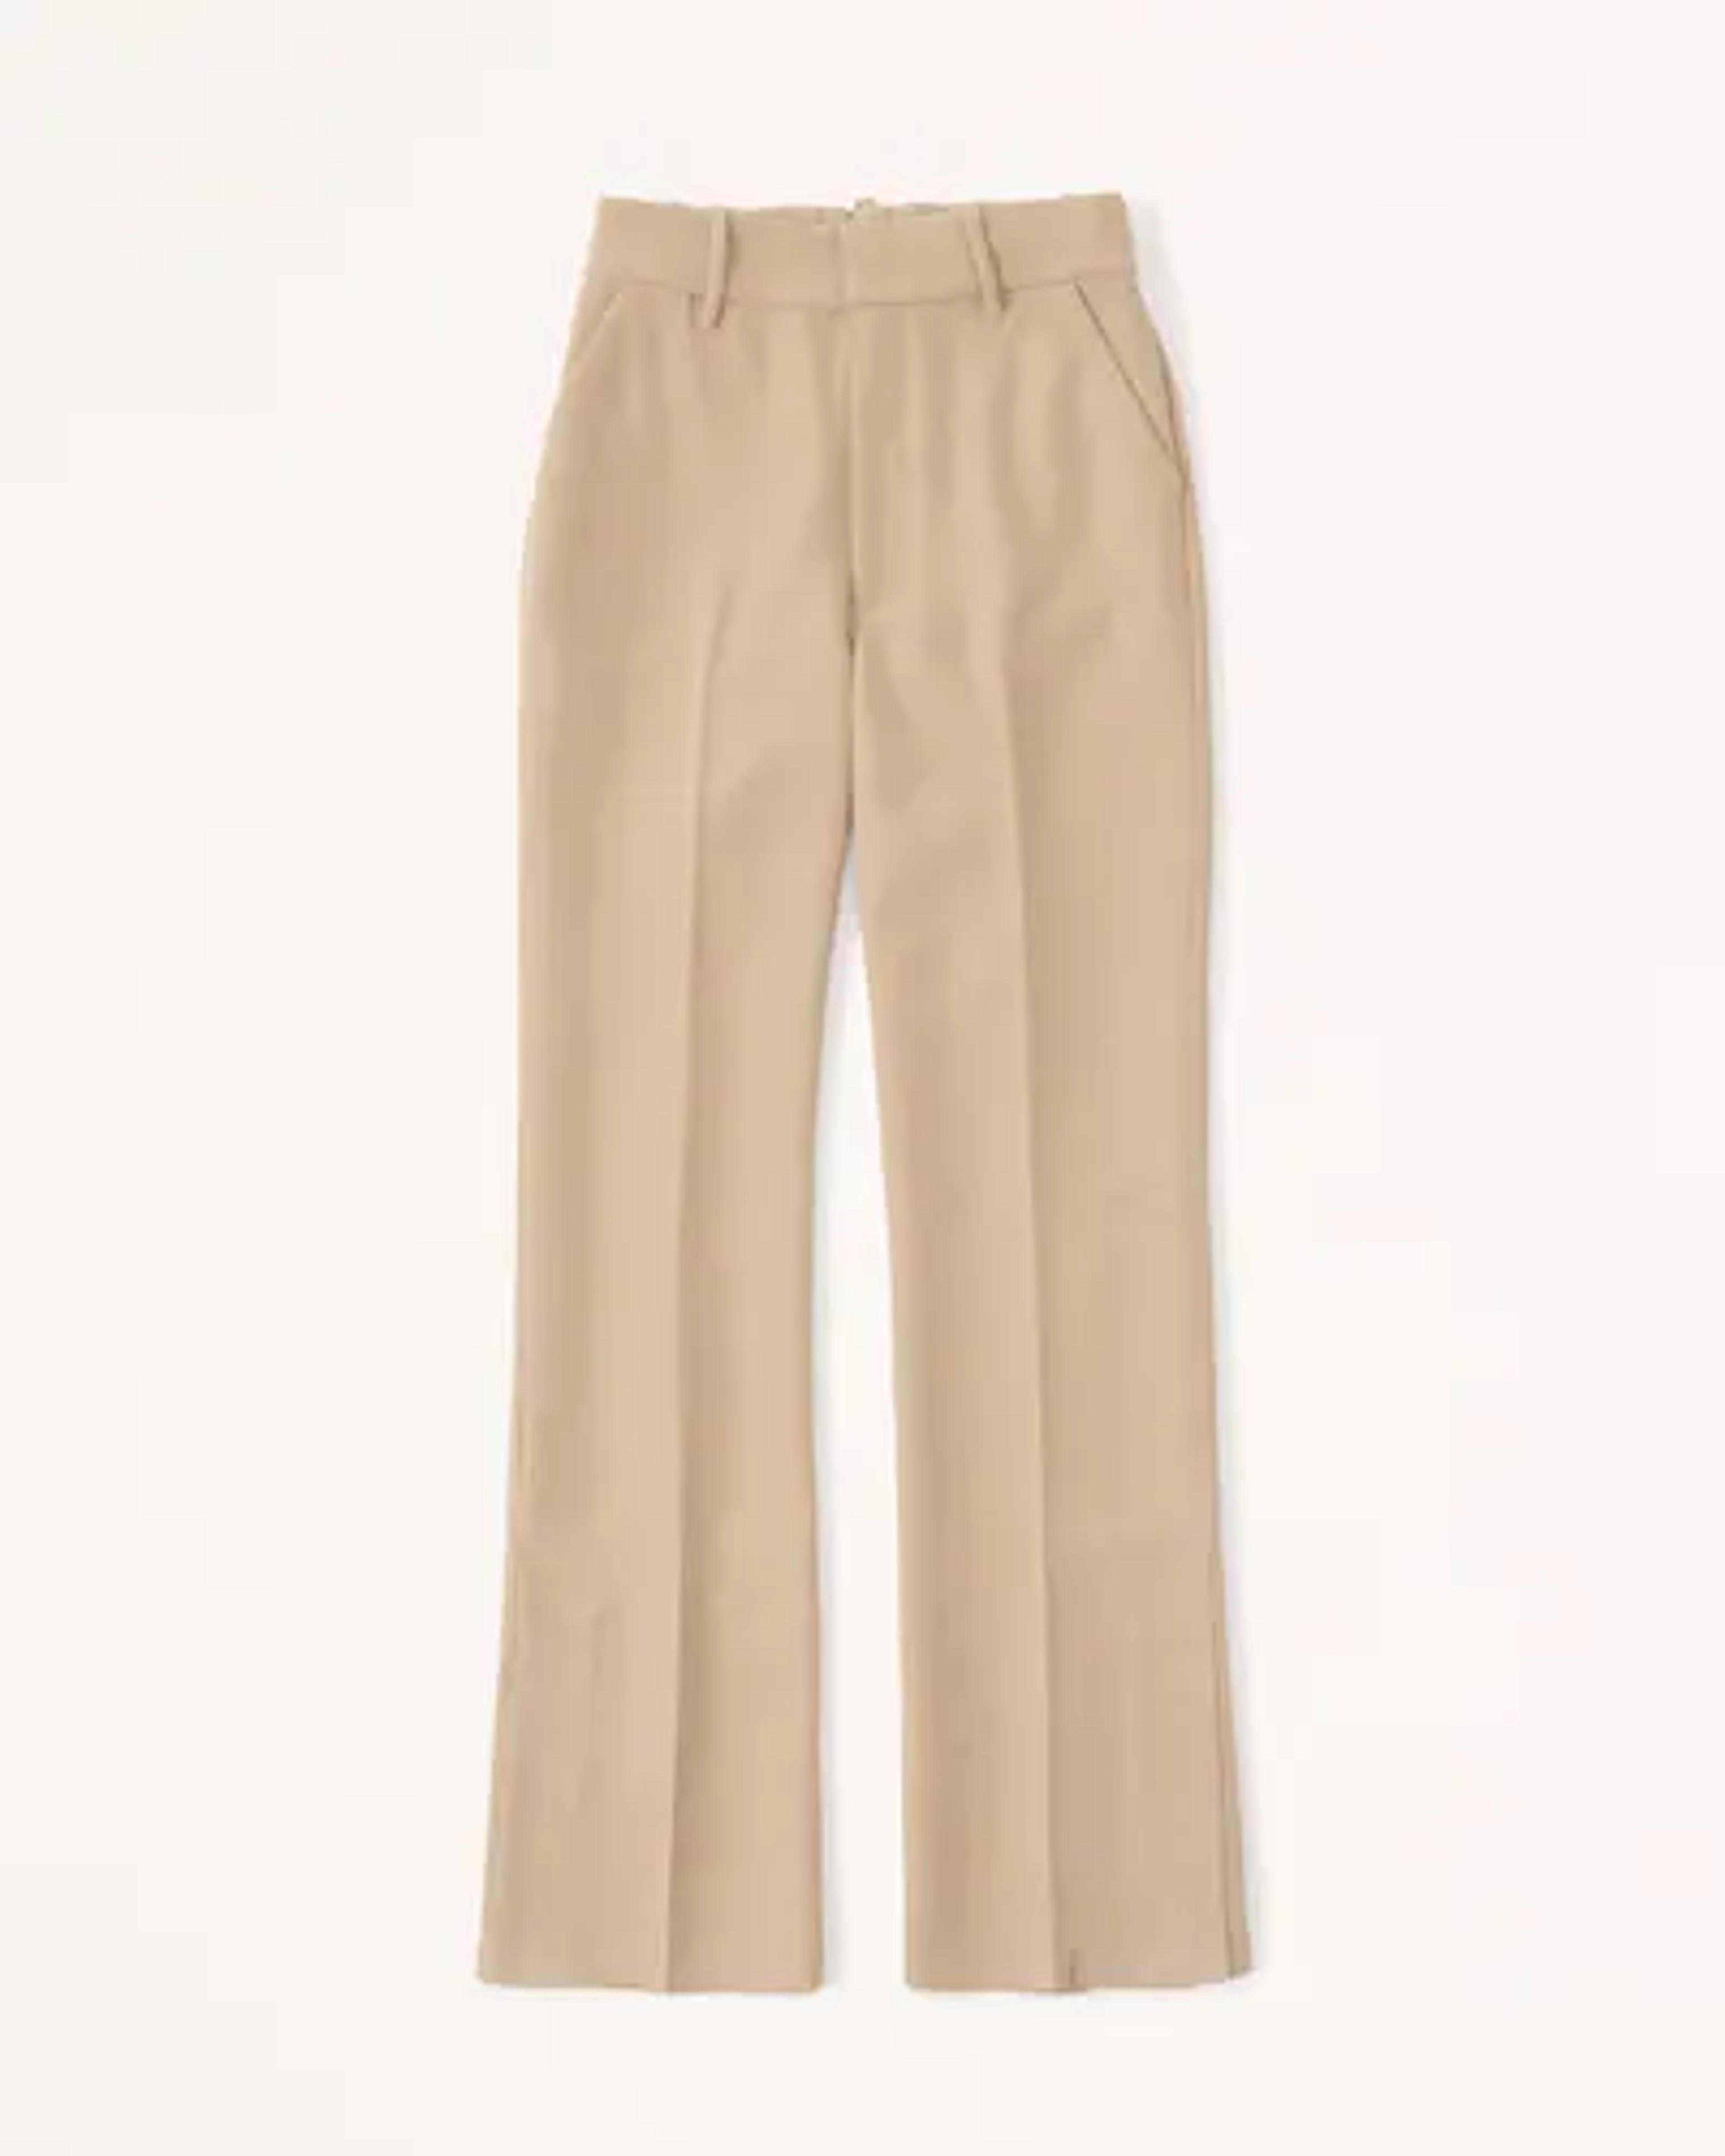 Women's Tailored Split-Hem Flare Pants | Women's Bottoms | Abercrombie.com